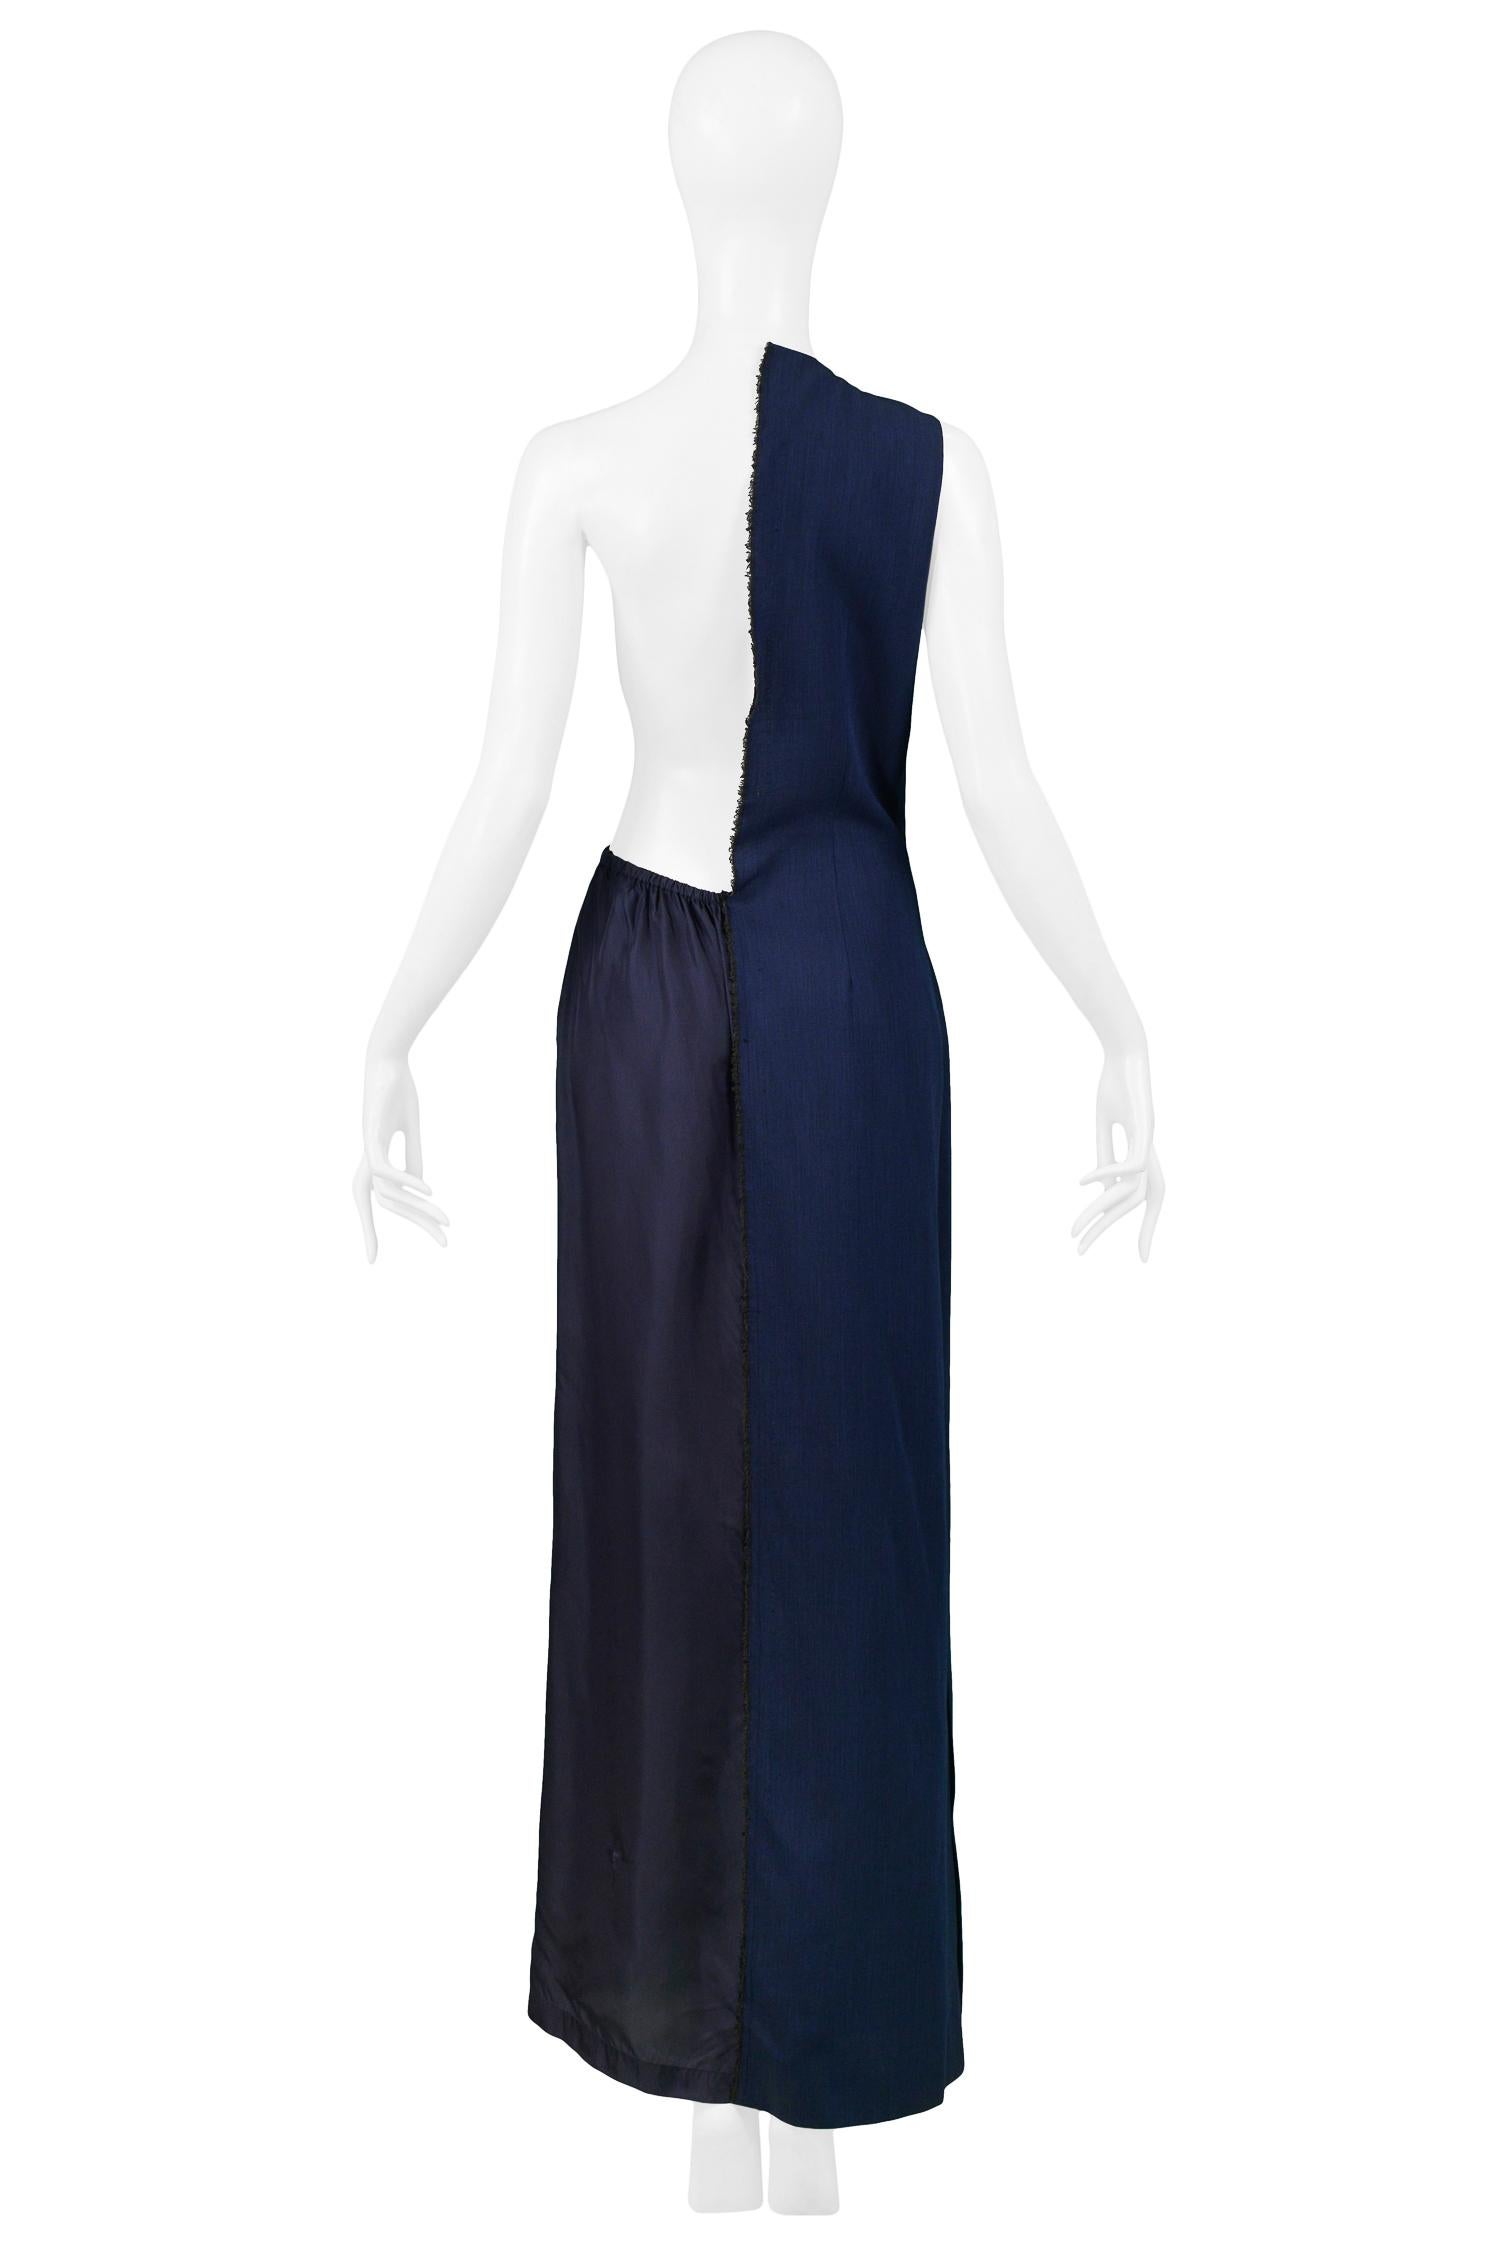 Maison Martin Margiela Blue Asymmetrical Avant Garde Maxi Apron Dress 2